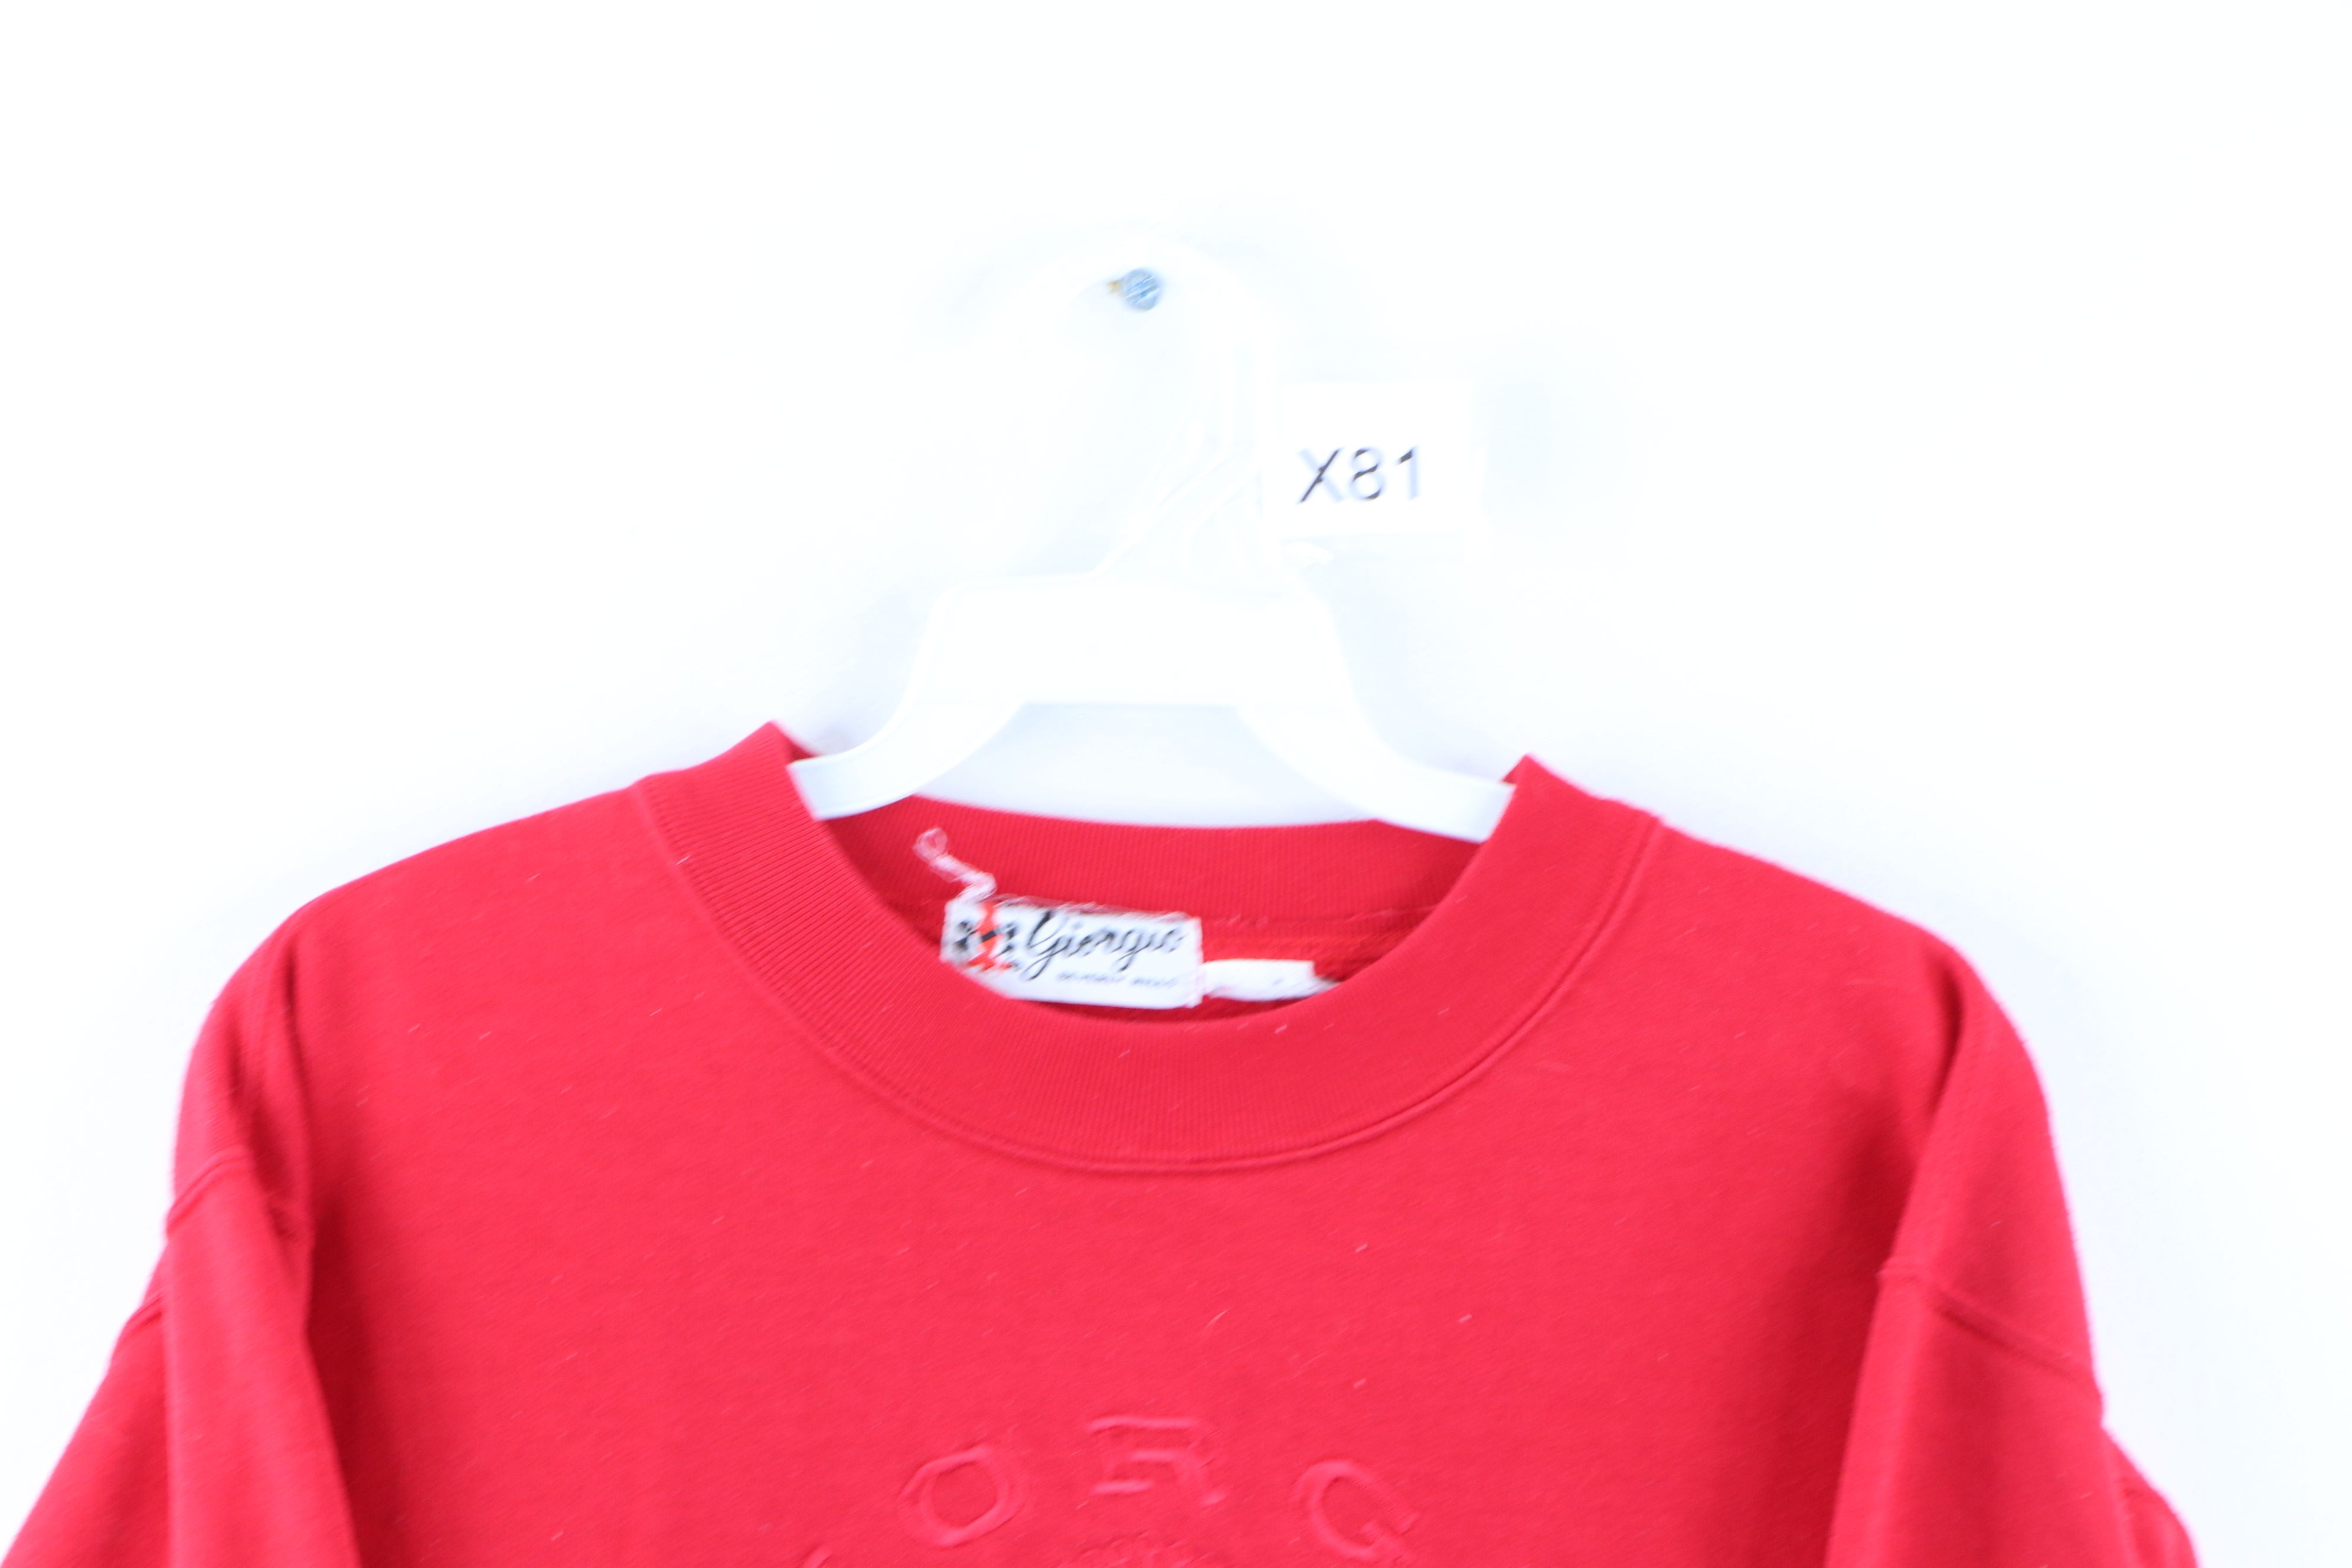 Vintage Vintage 90s Streetwear Giorgio Beverly Hills Sweatshirt Size US S / EU 44-46 / 1 - 2 Preview